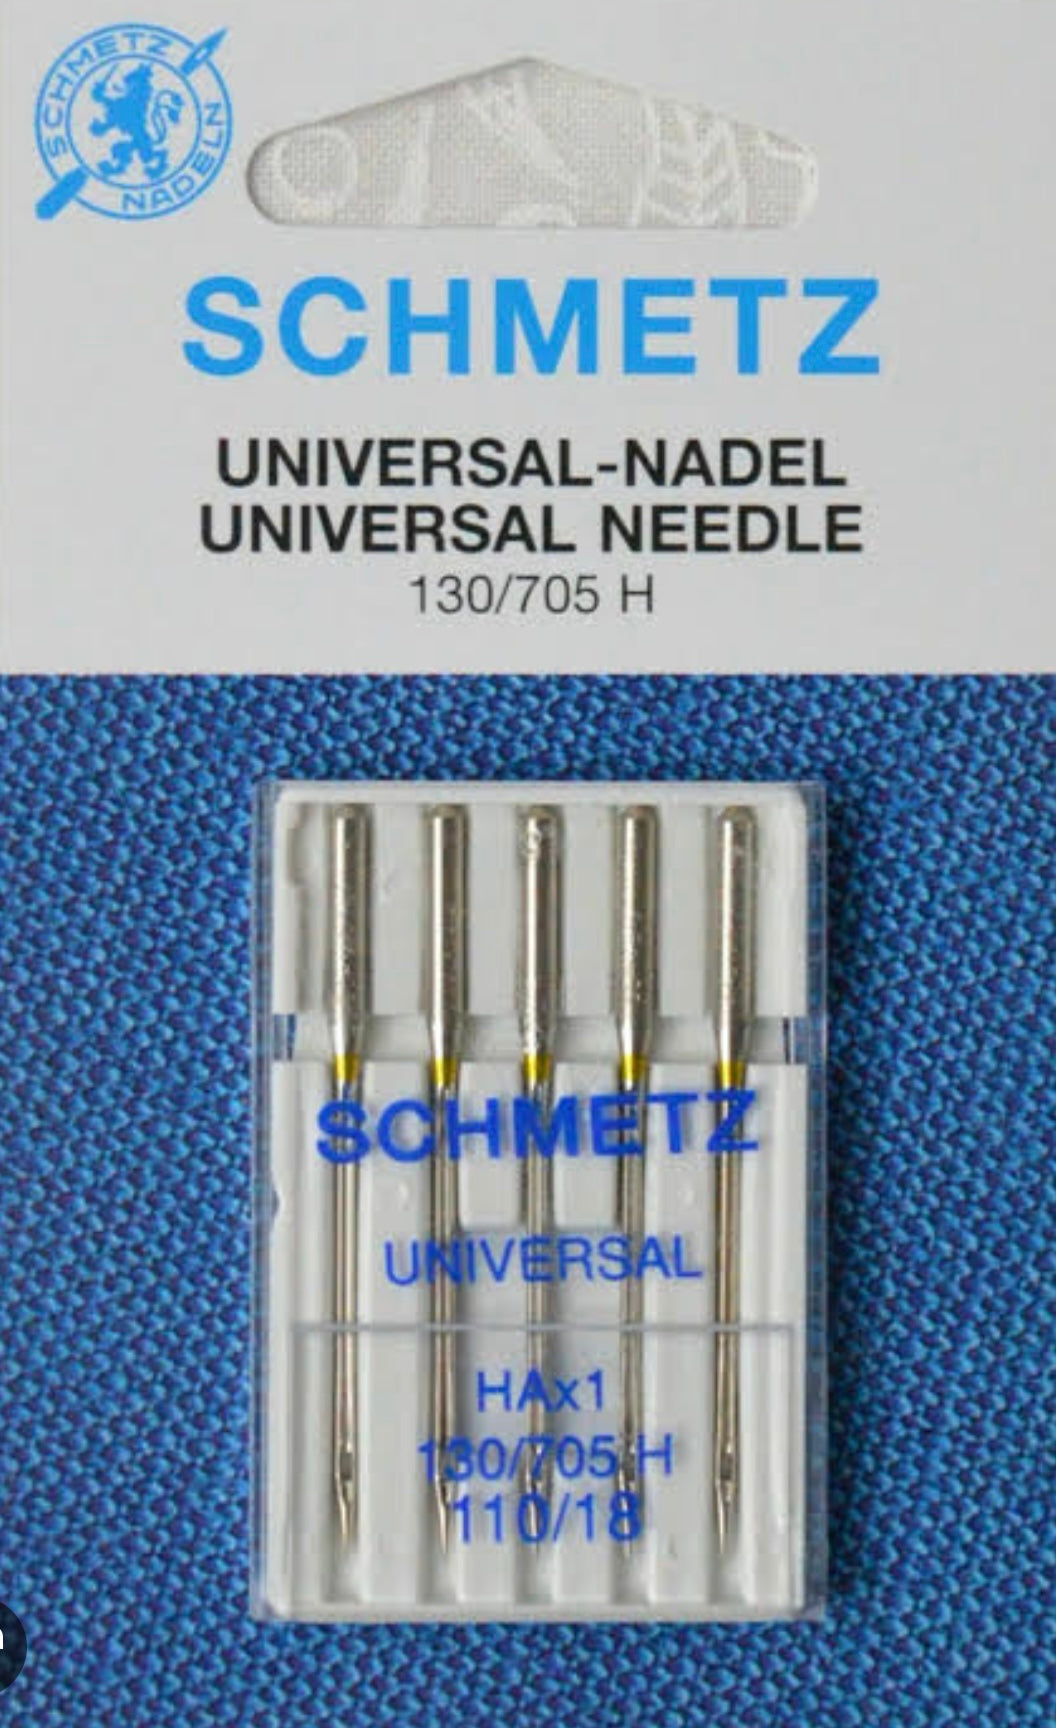 SCHMETZ Universal 110/18 Needles